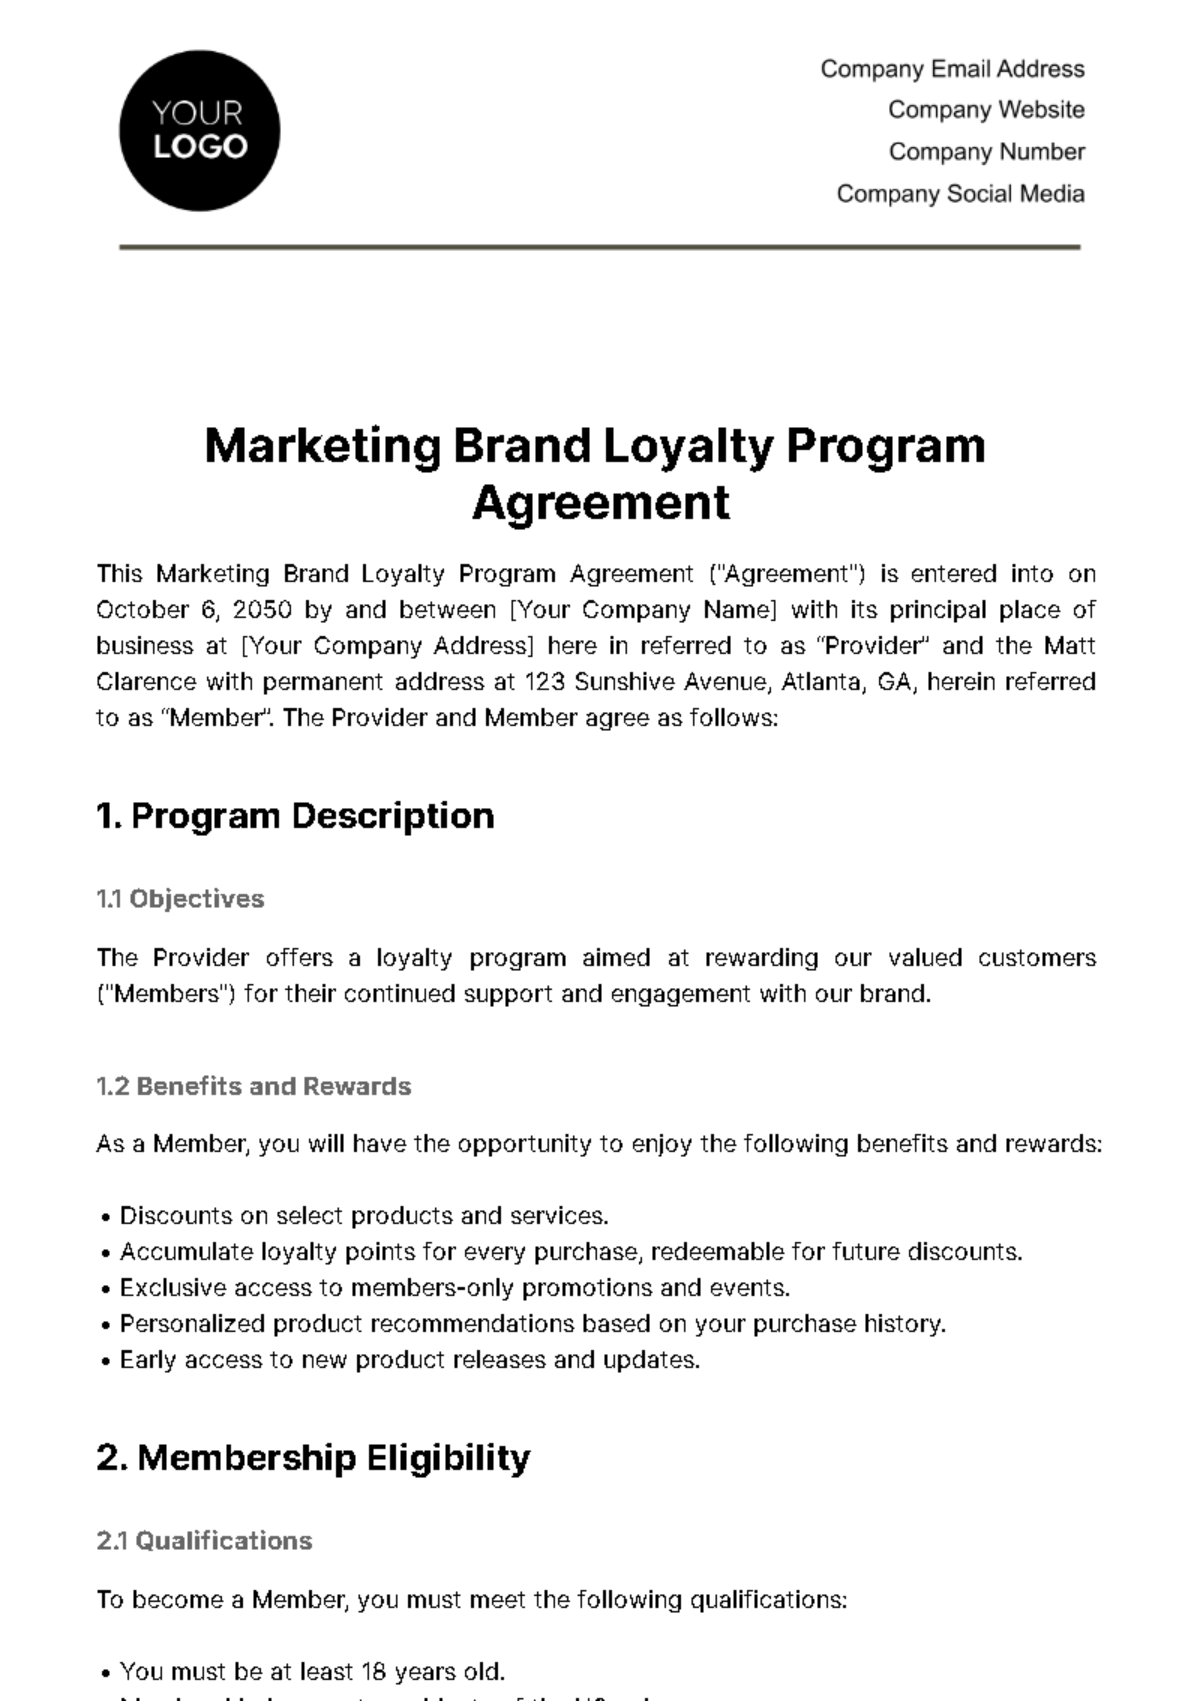 Marketing Brand Loyalty Program Agreement Template